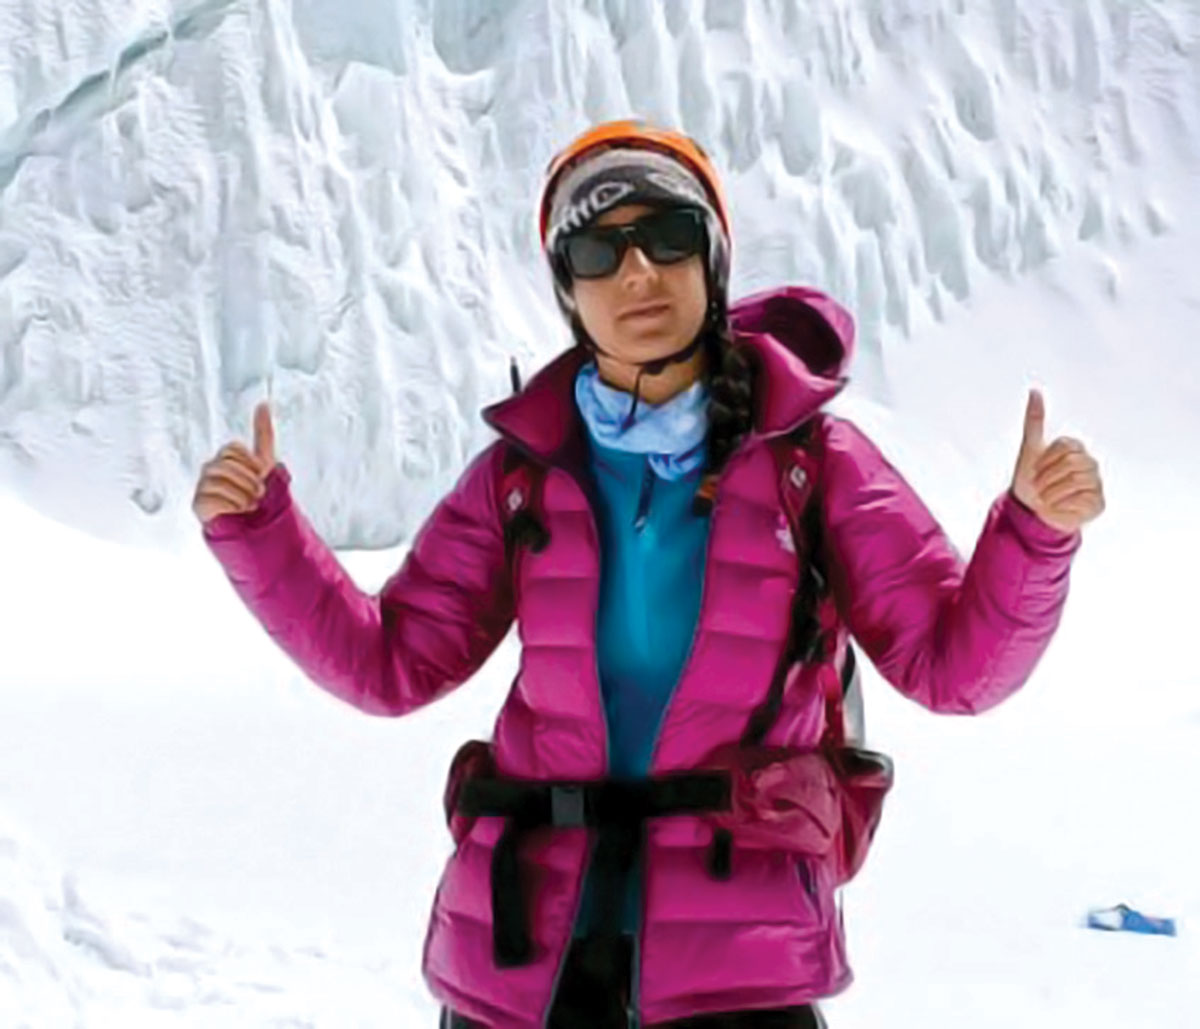 Nahida Manzoor Kashmir's First Lady Everester